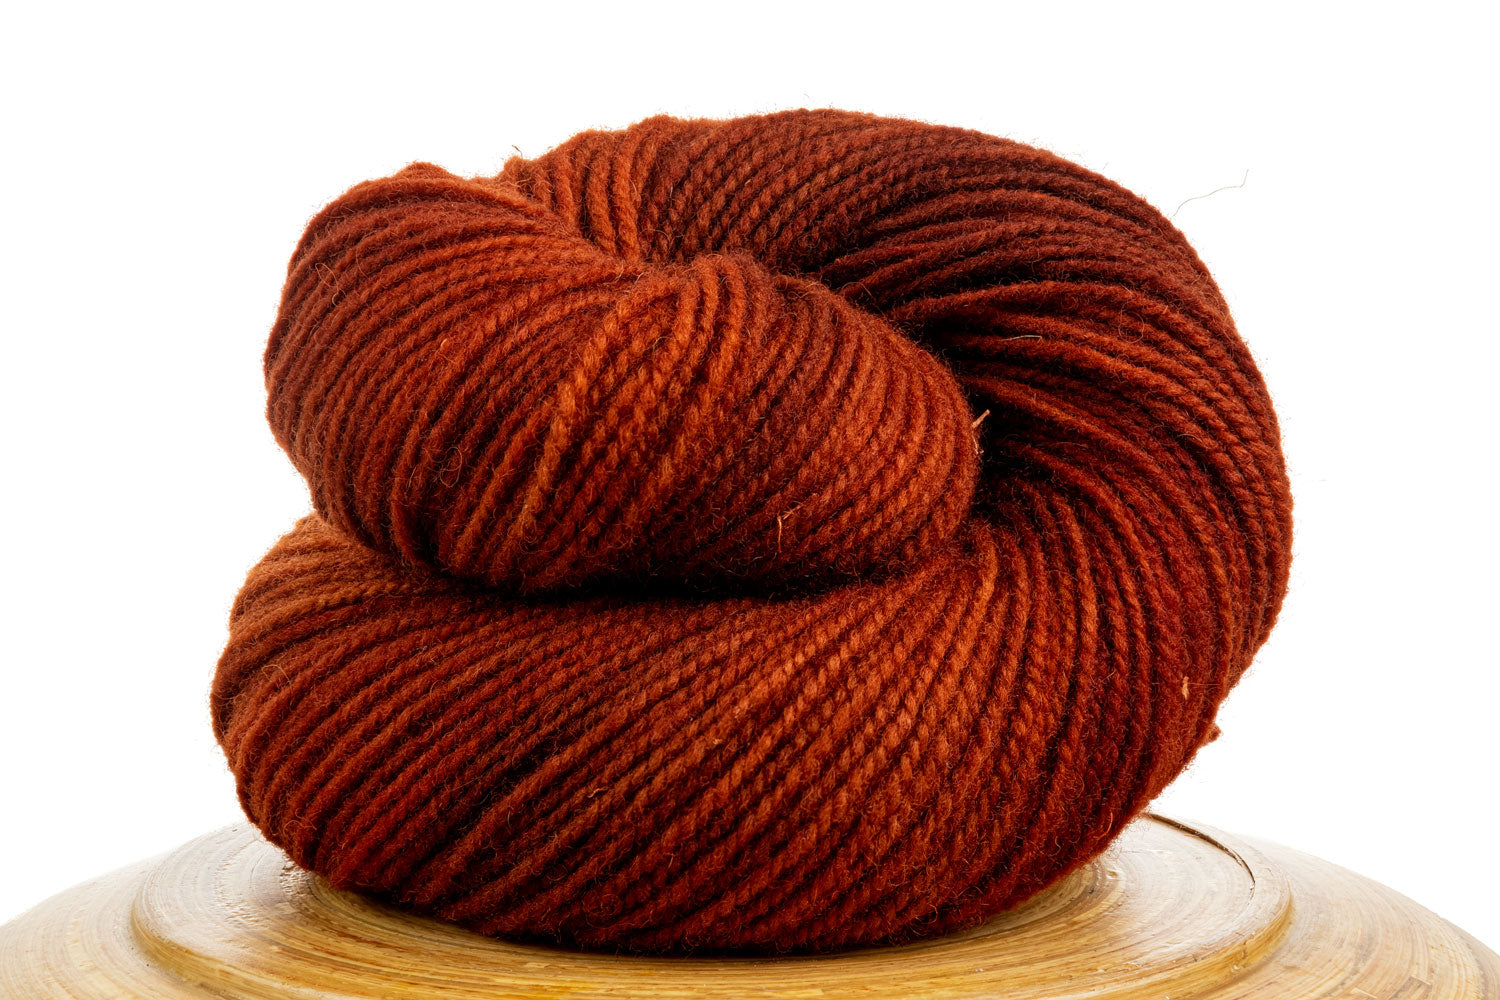 Winfield Canadian hand-dyed wool yarn in Sugar Maple, a deep orange